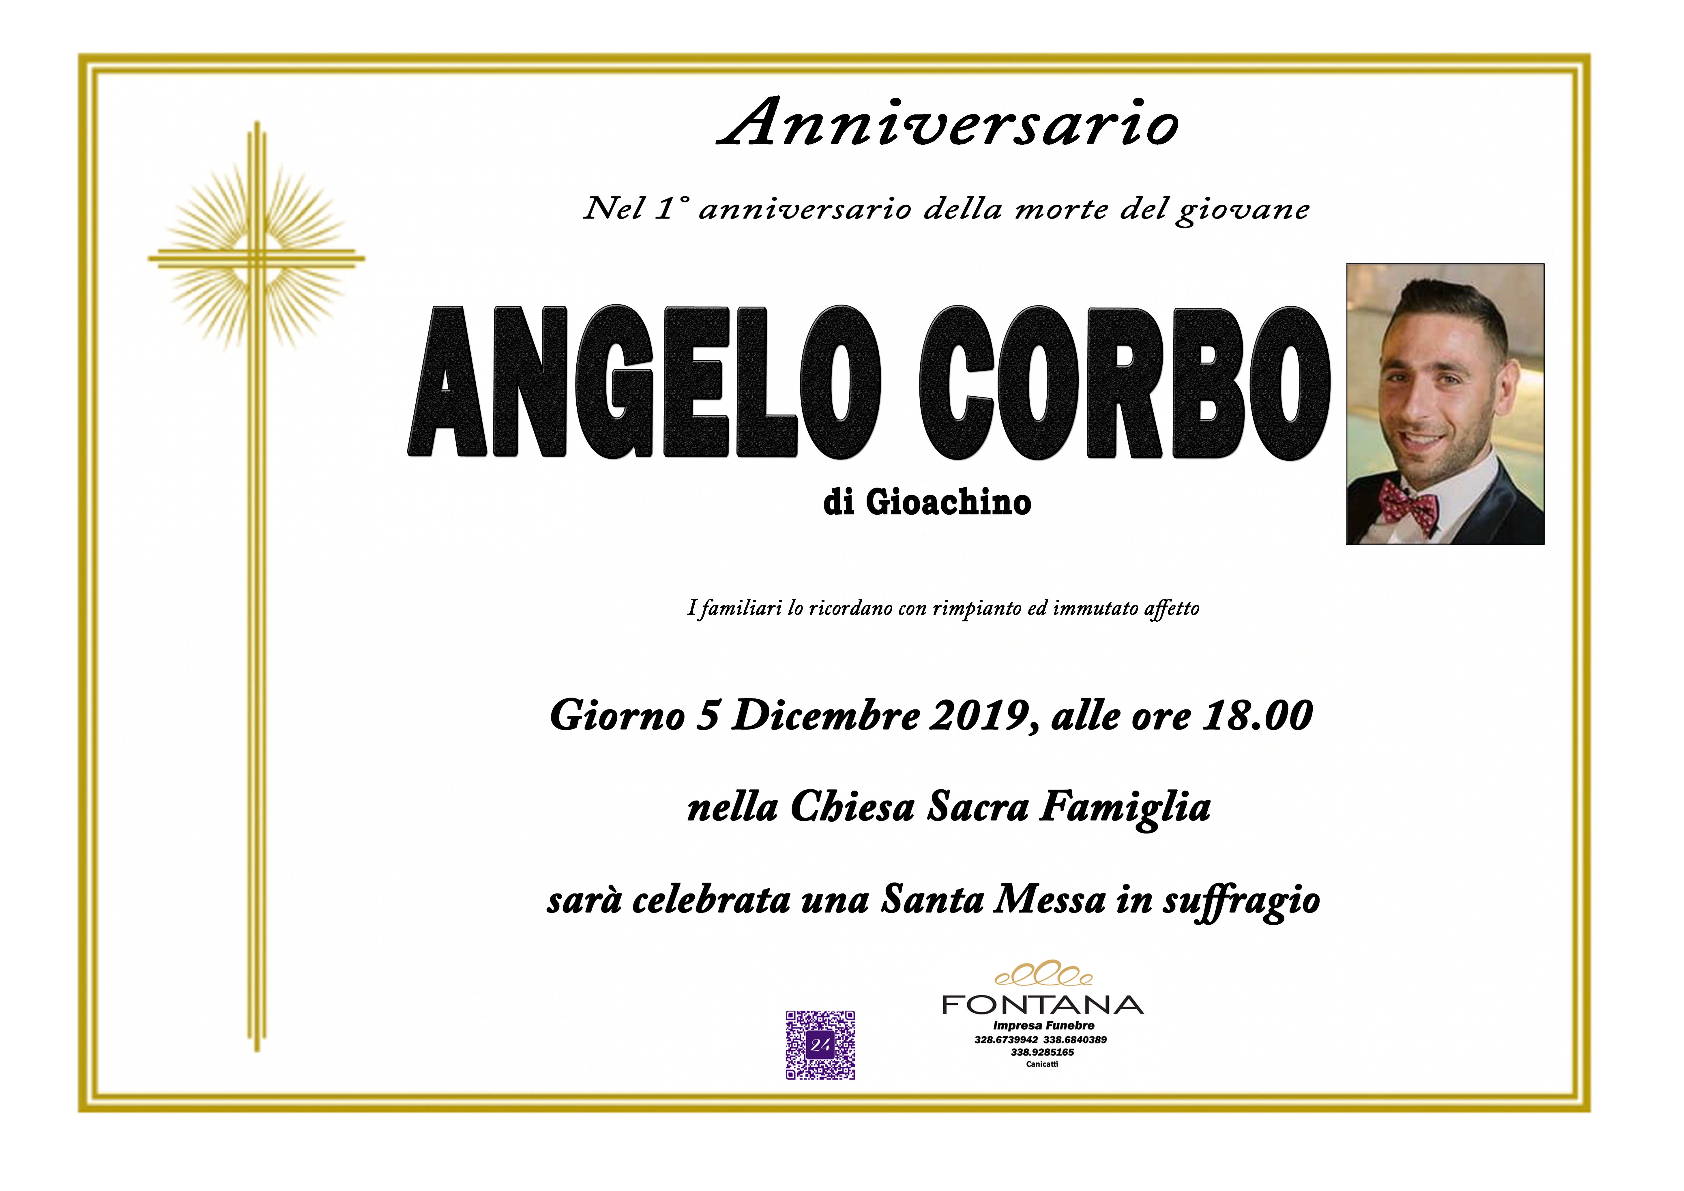 Angelo Corbo